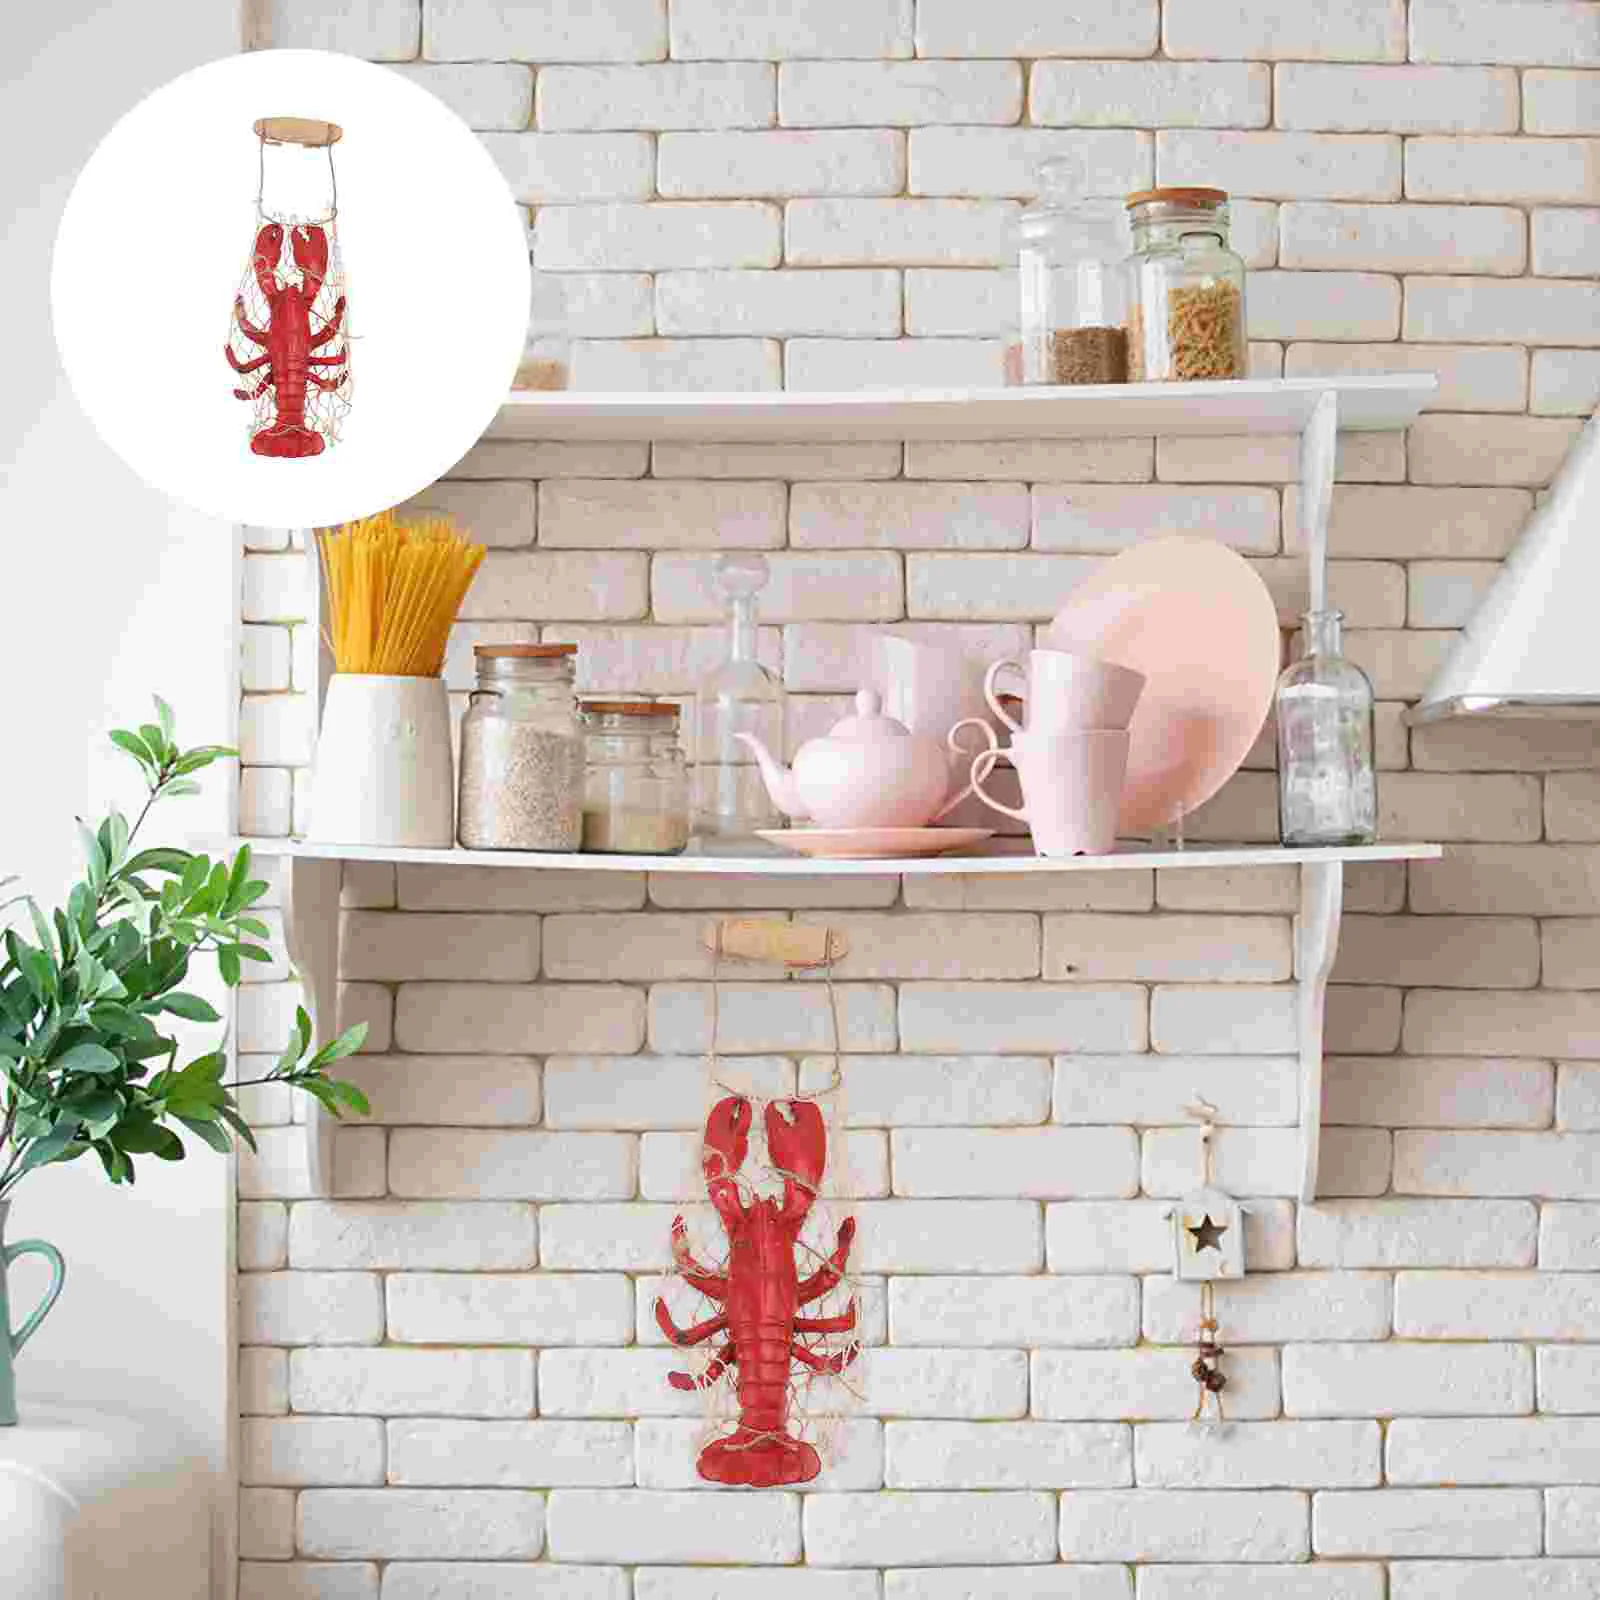 

Lobster Nautical Wall Decor Resin Wall Hanging Lobster Crab Wall Decor Pendant Living Room Bedroom Wall Art Decor Sculpture